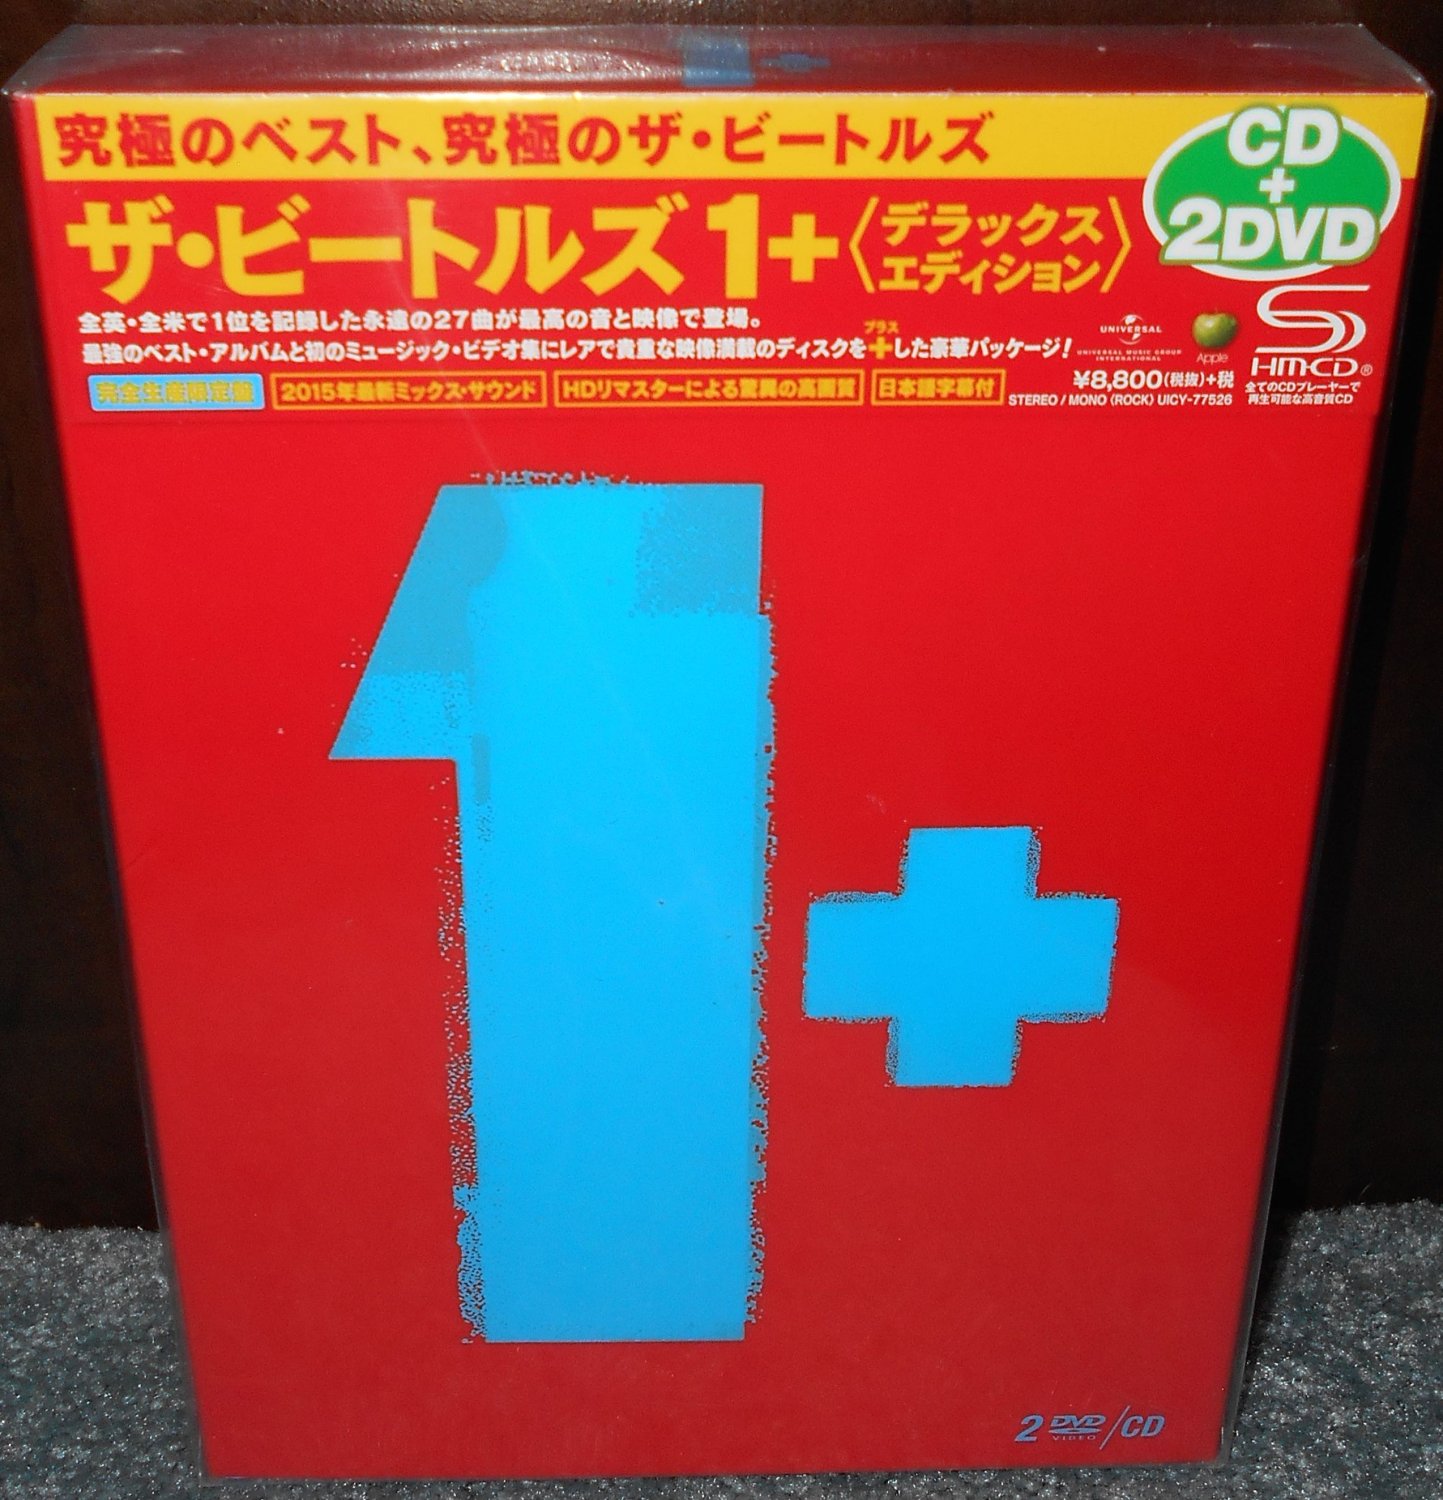 The Beatles 1+ Japan Japanese Import SHM-CD 2-DVD One Deluxe